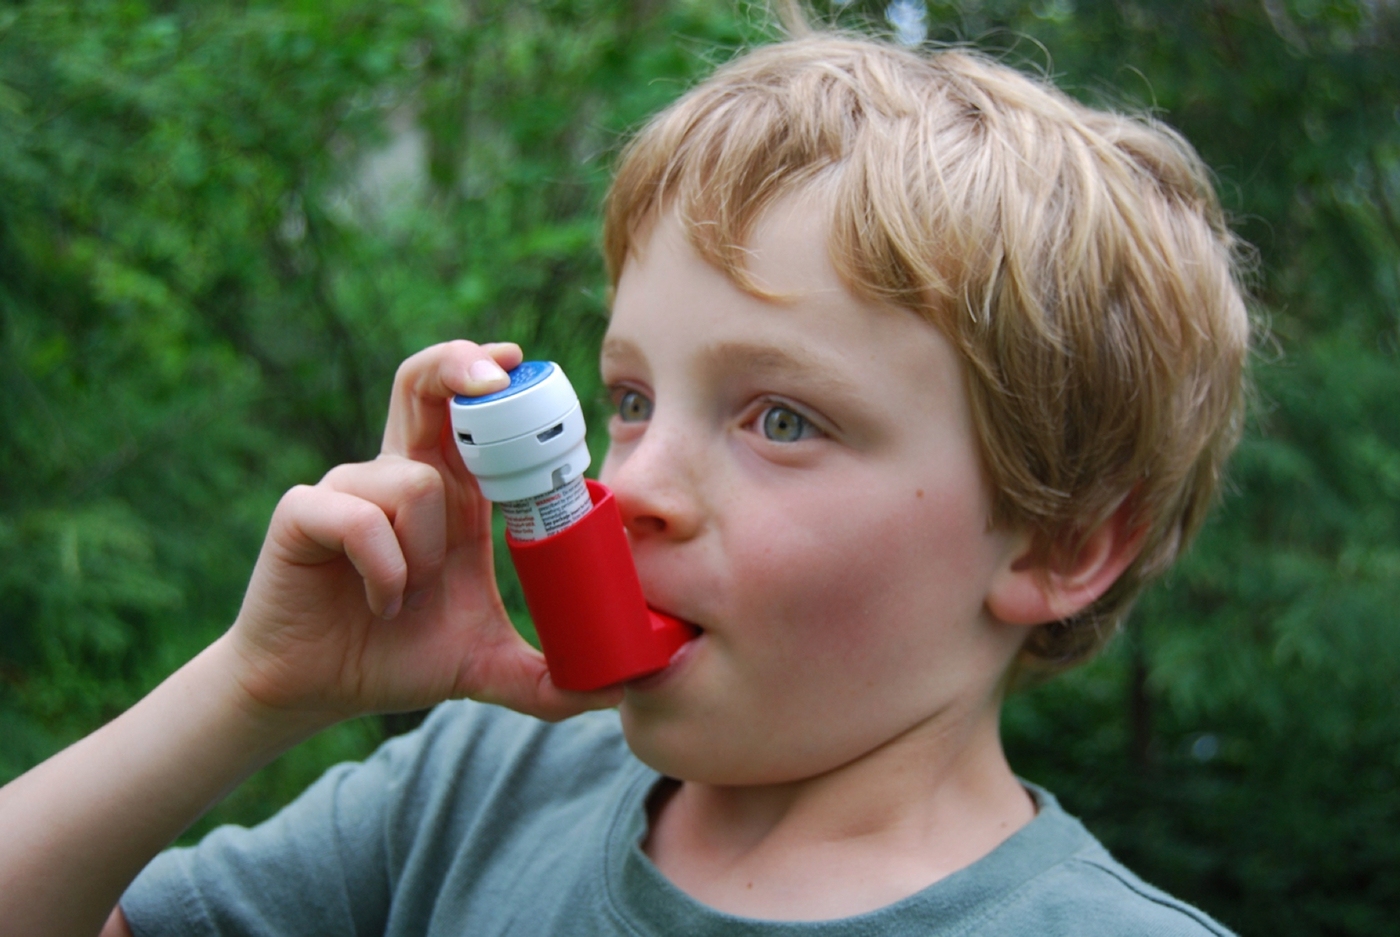 Adobe Portfolio medical asthma sensor gps UI medicine handheld medical device bluetooth wireless